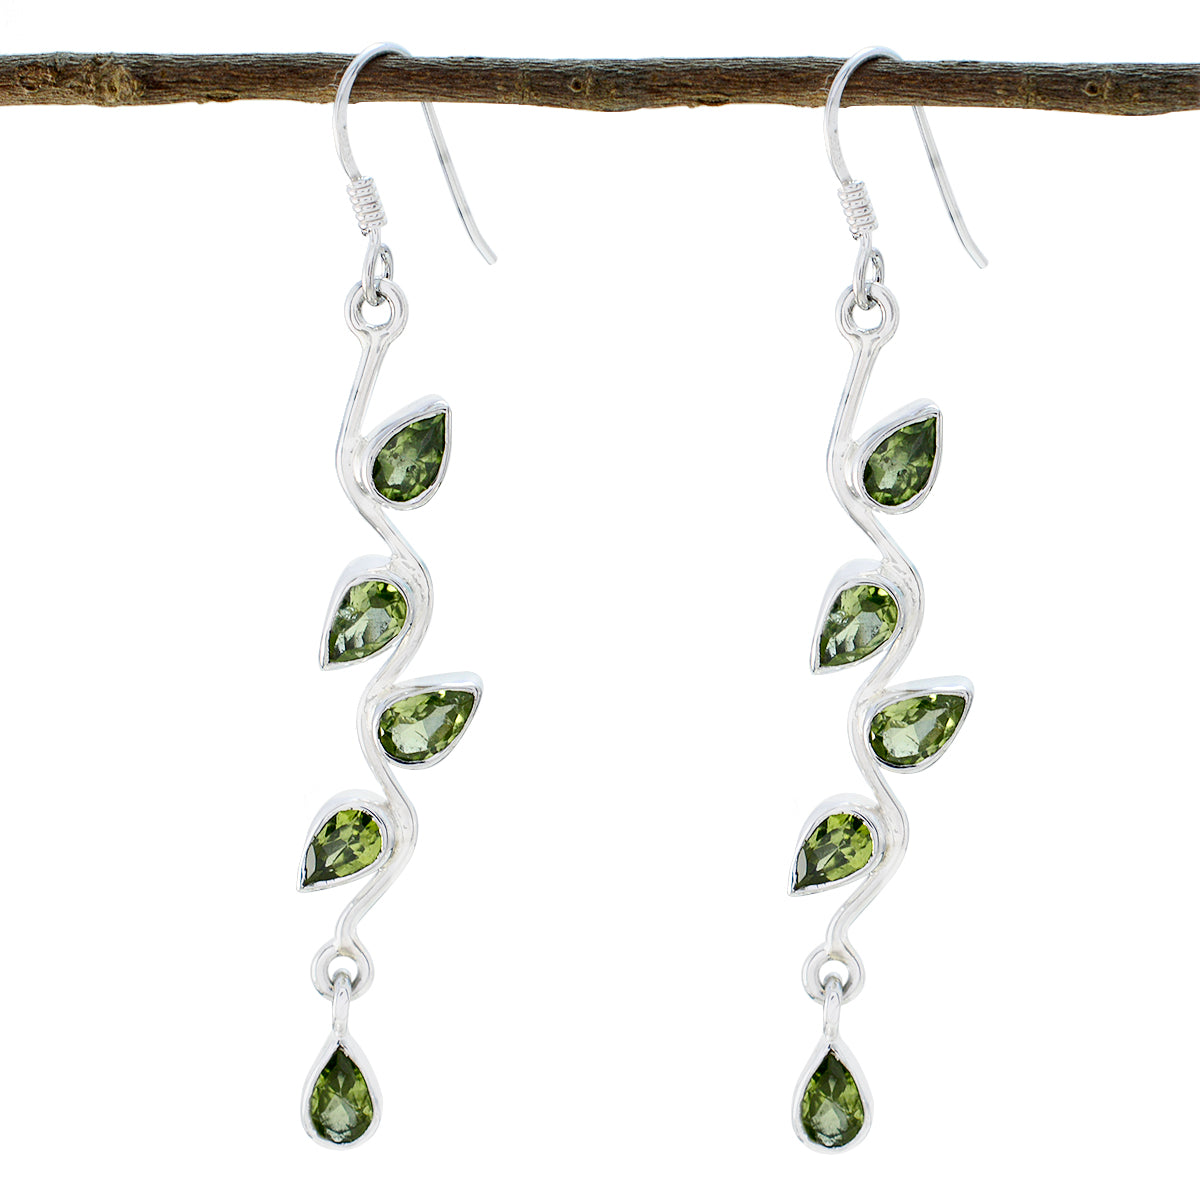 Riyo Real Gemstones pear Faceted Green Peridot Silver Earrings gift for anniversary